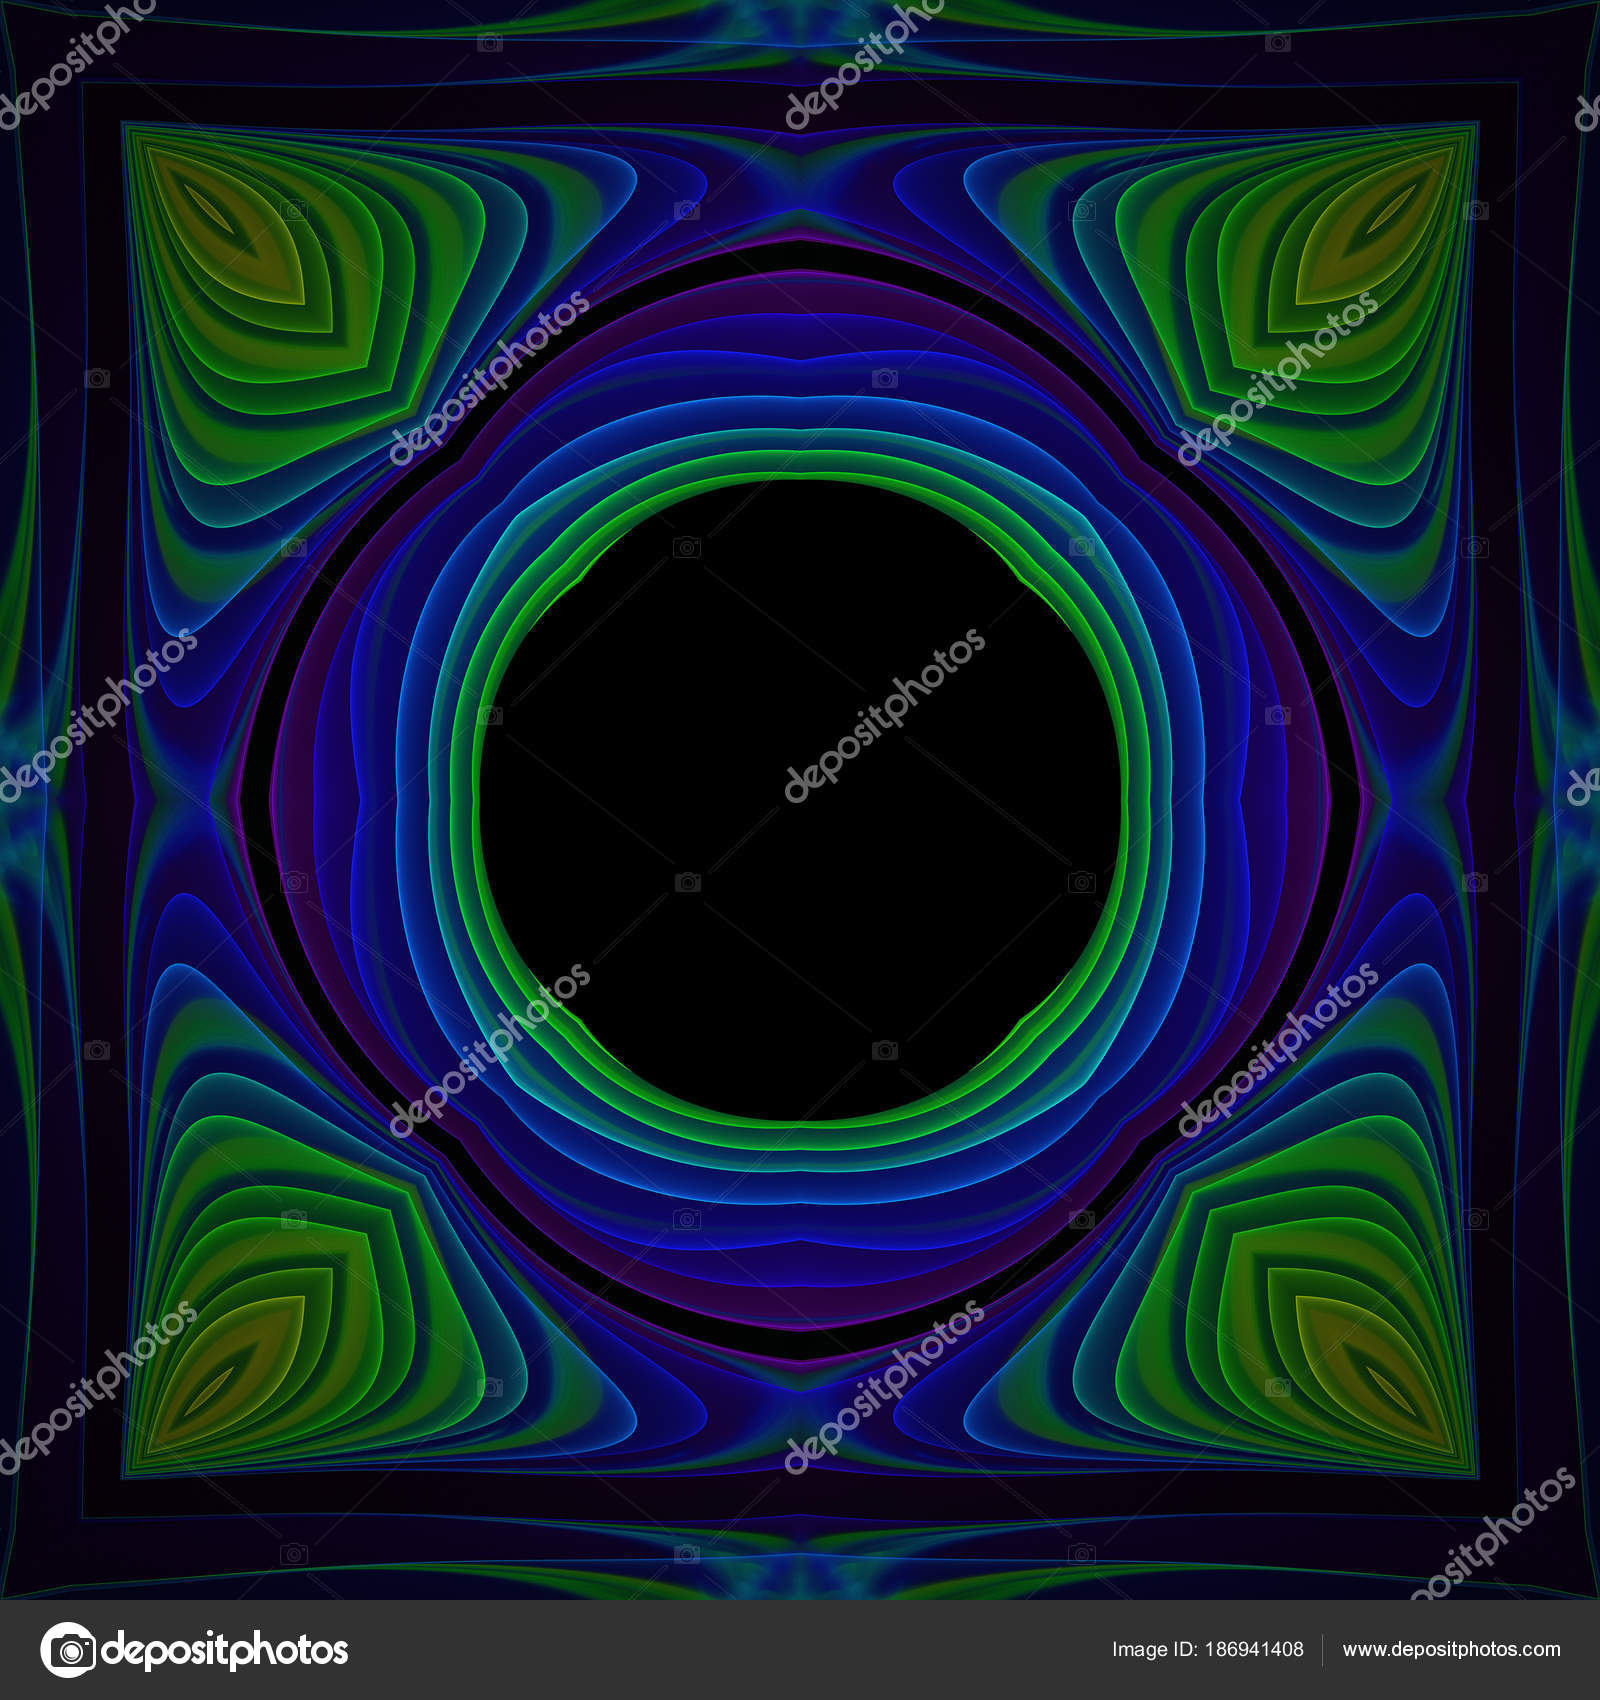 Colorful fractal design — Stock Photo © Albisoima #186941408